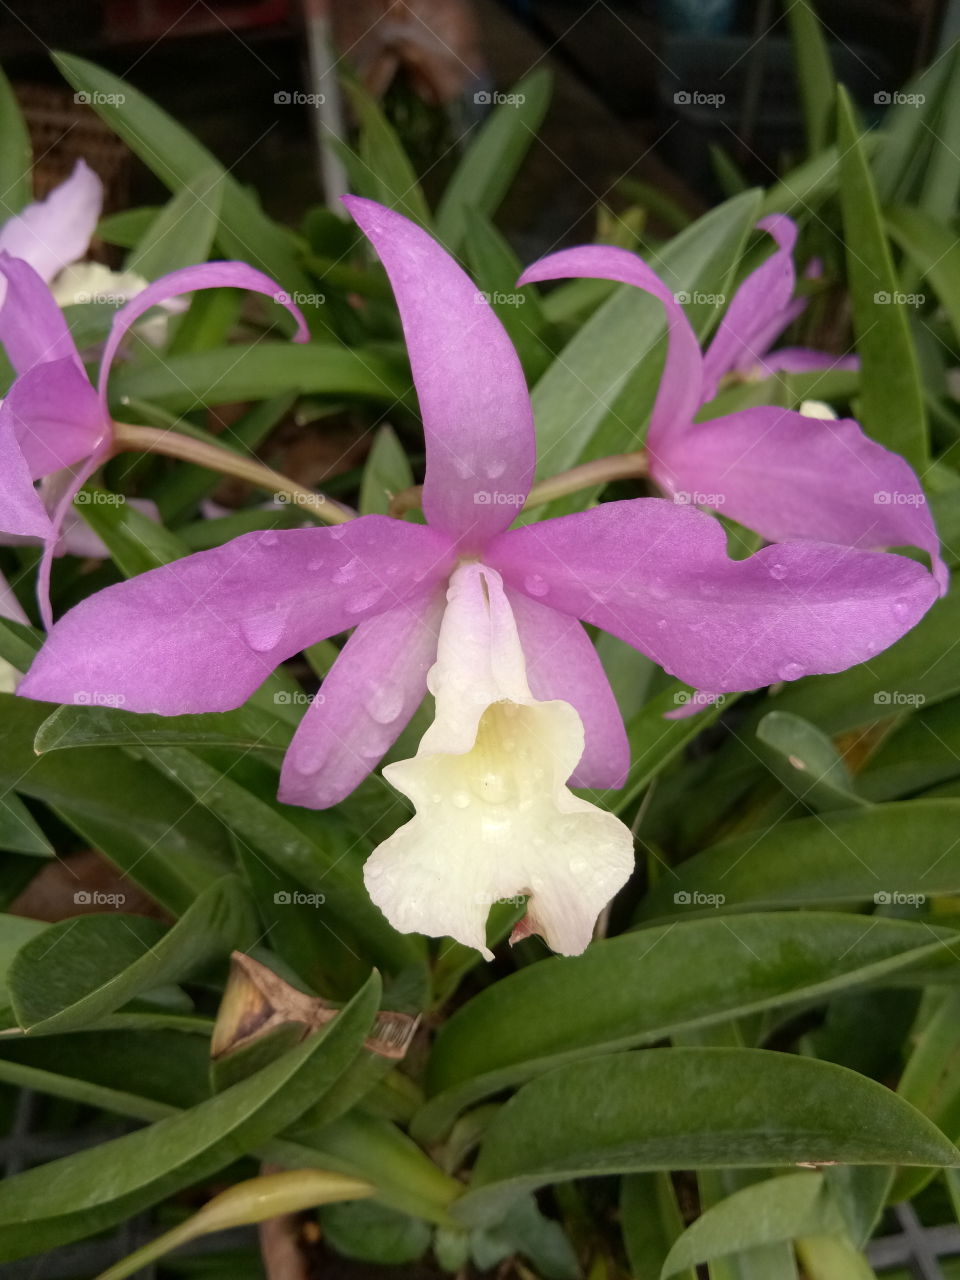 flower
thailand
orchid